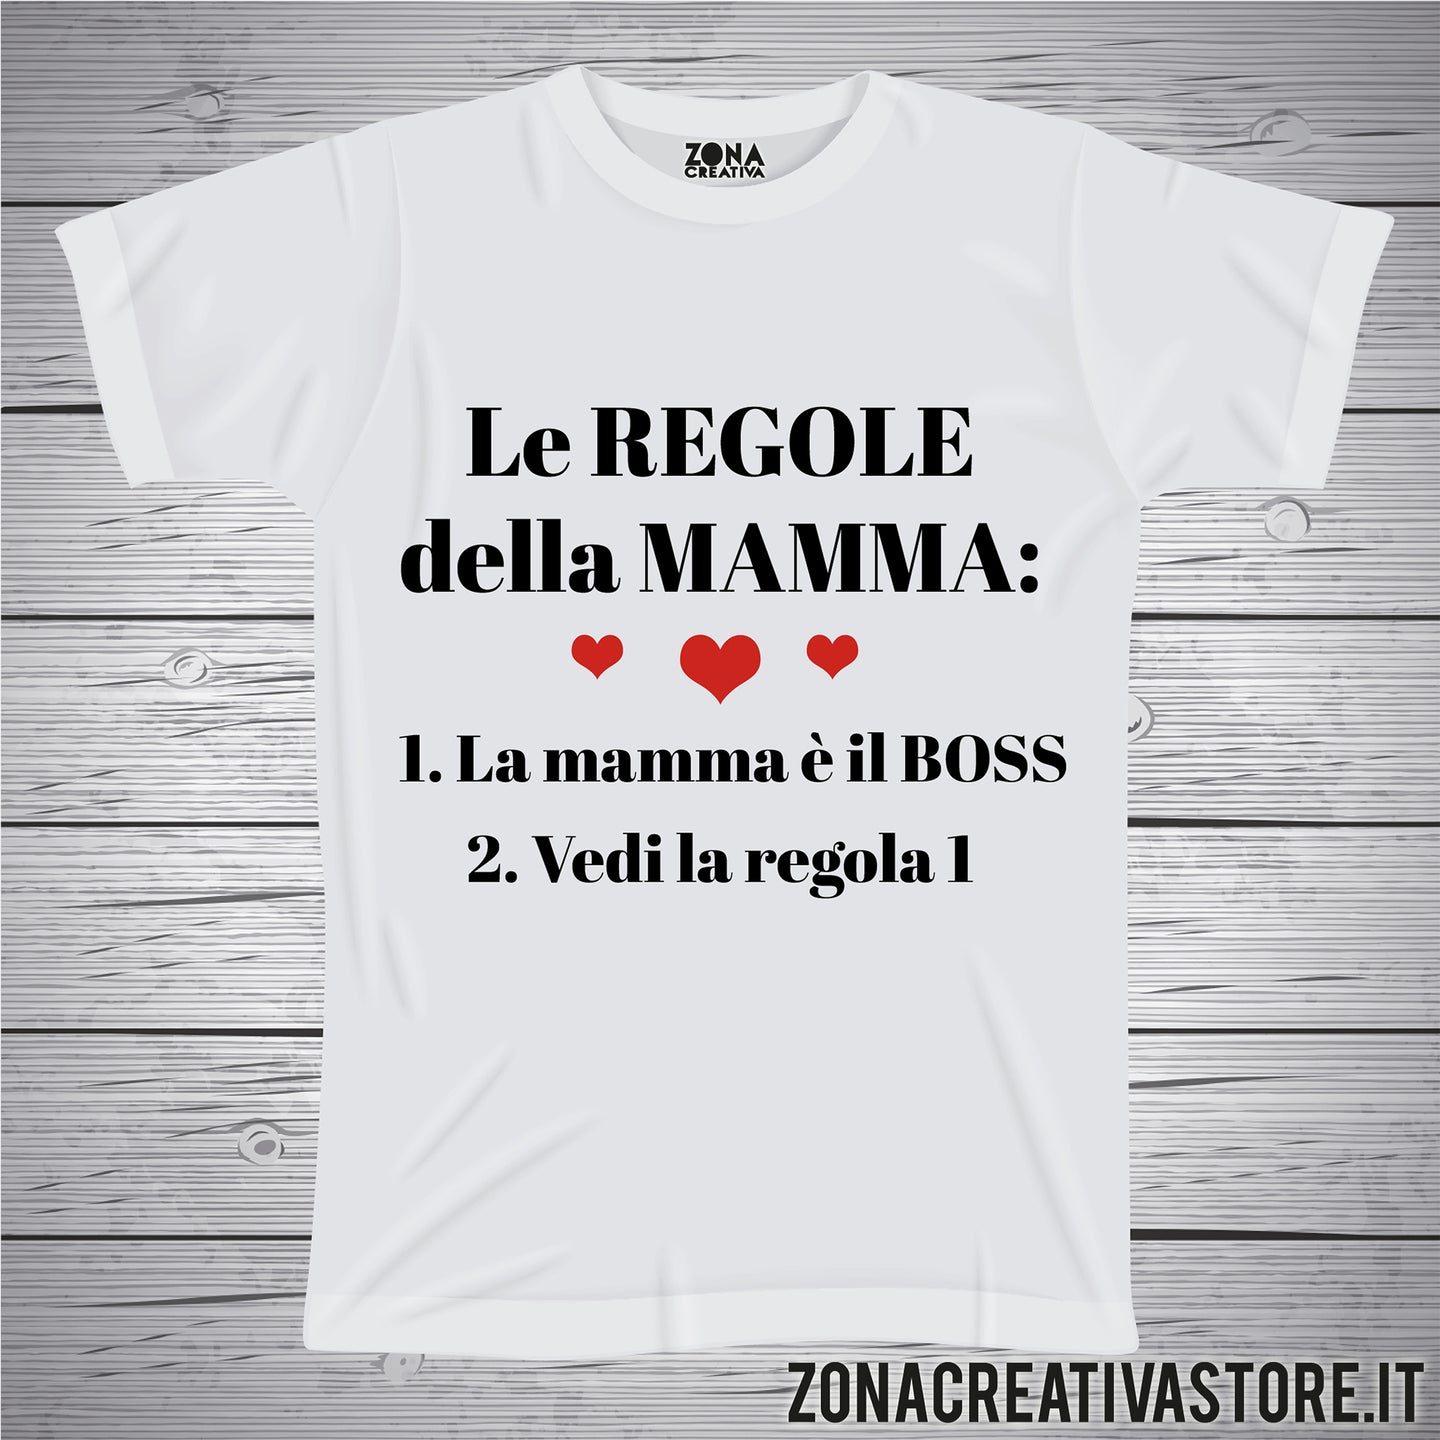 T-shirt LE REGOLE DELLA MAMMA